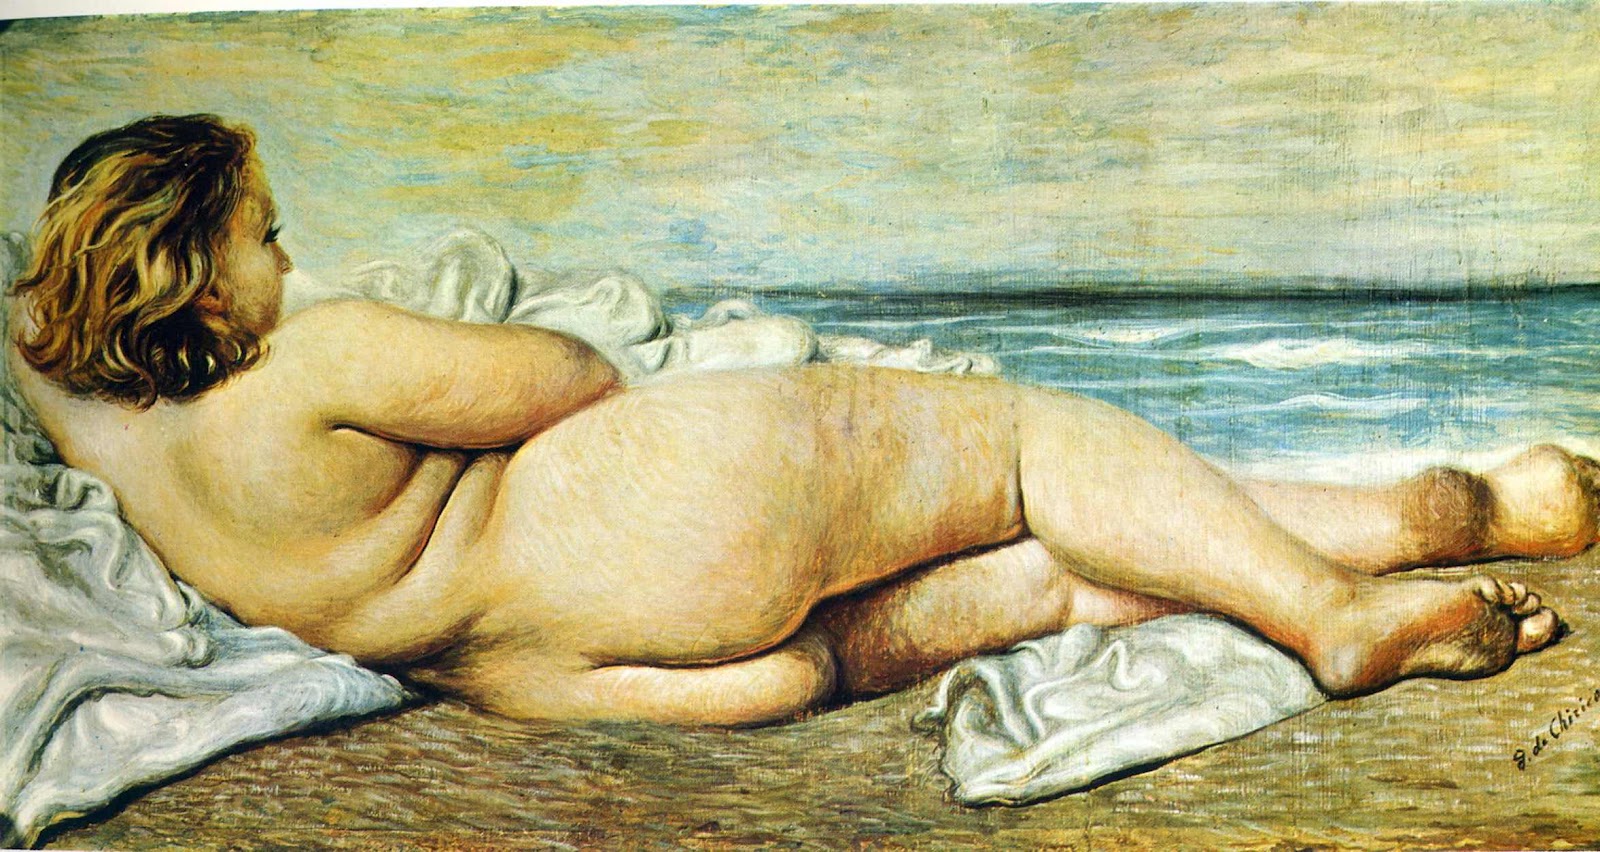 Nude Woman On The Beach, Giorgio de Chirico, 1932